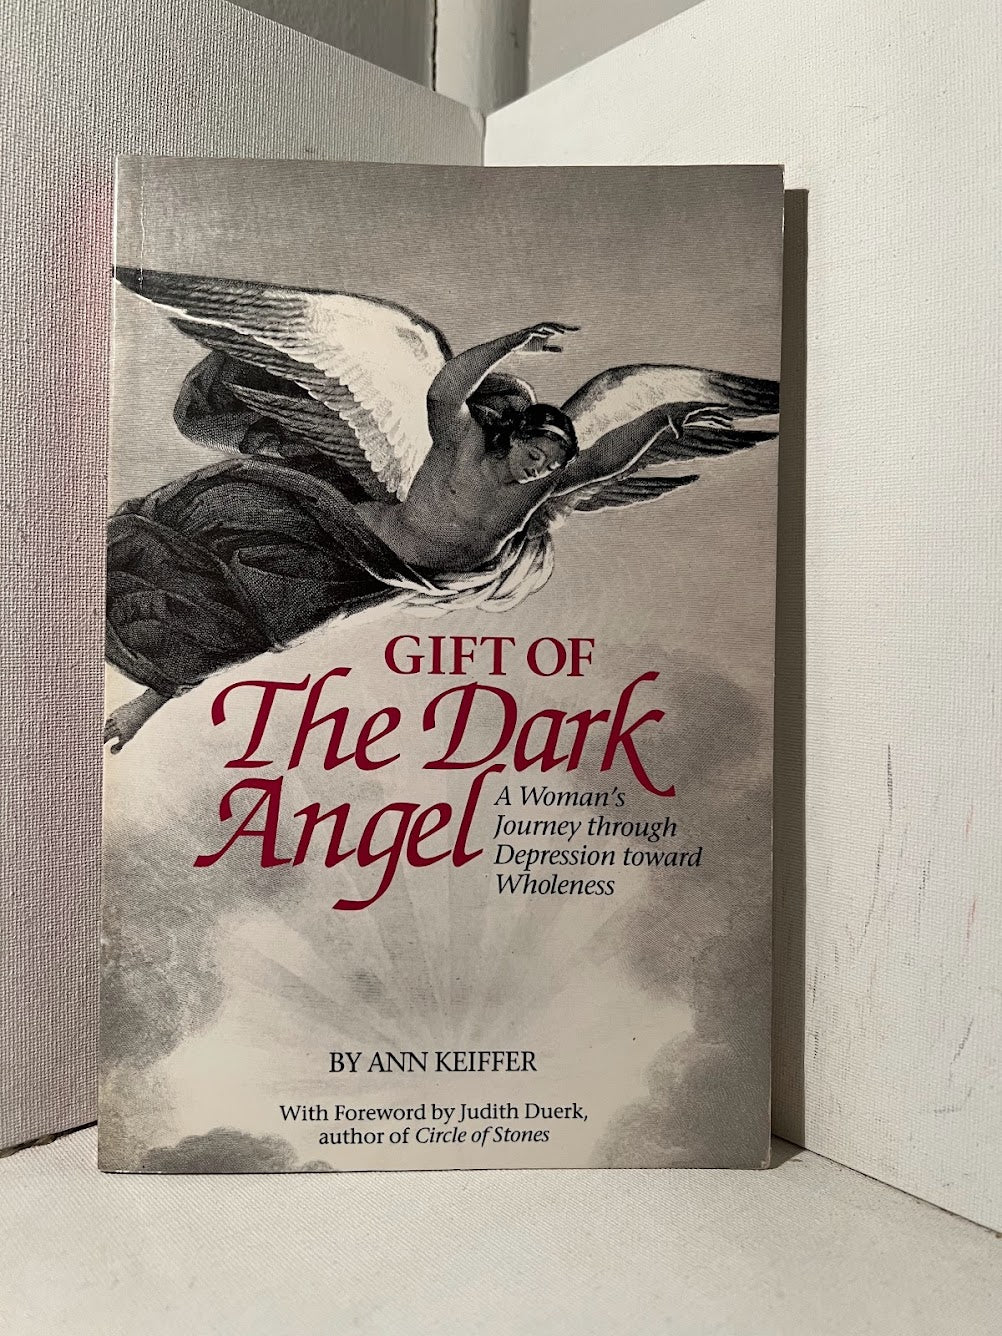 Gift of the Dark Angel by Ann Keiffer